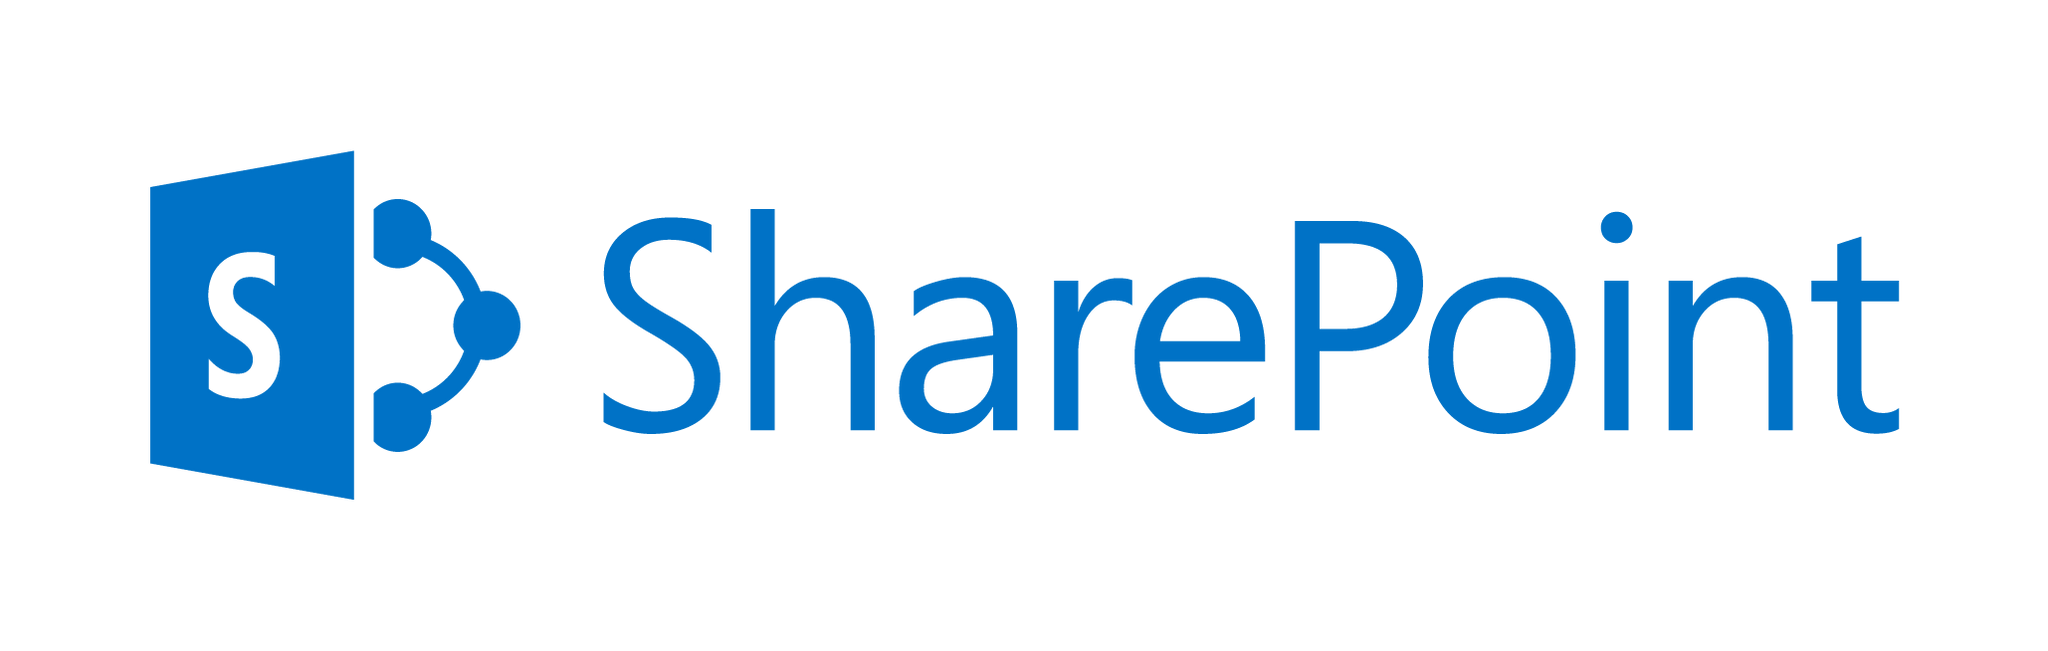 Nefunguje Microsoft Sharepoint?